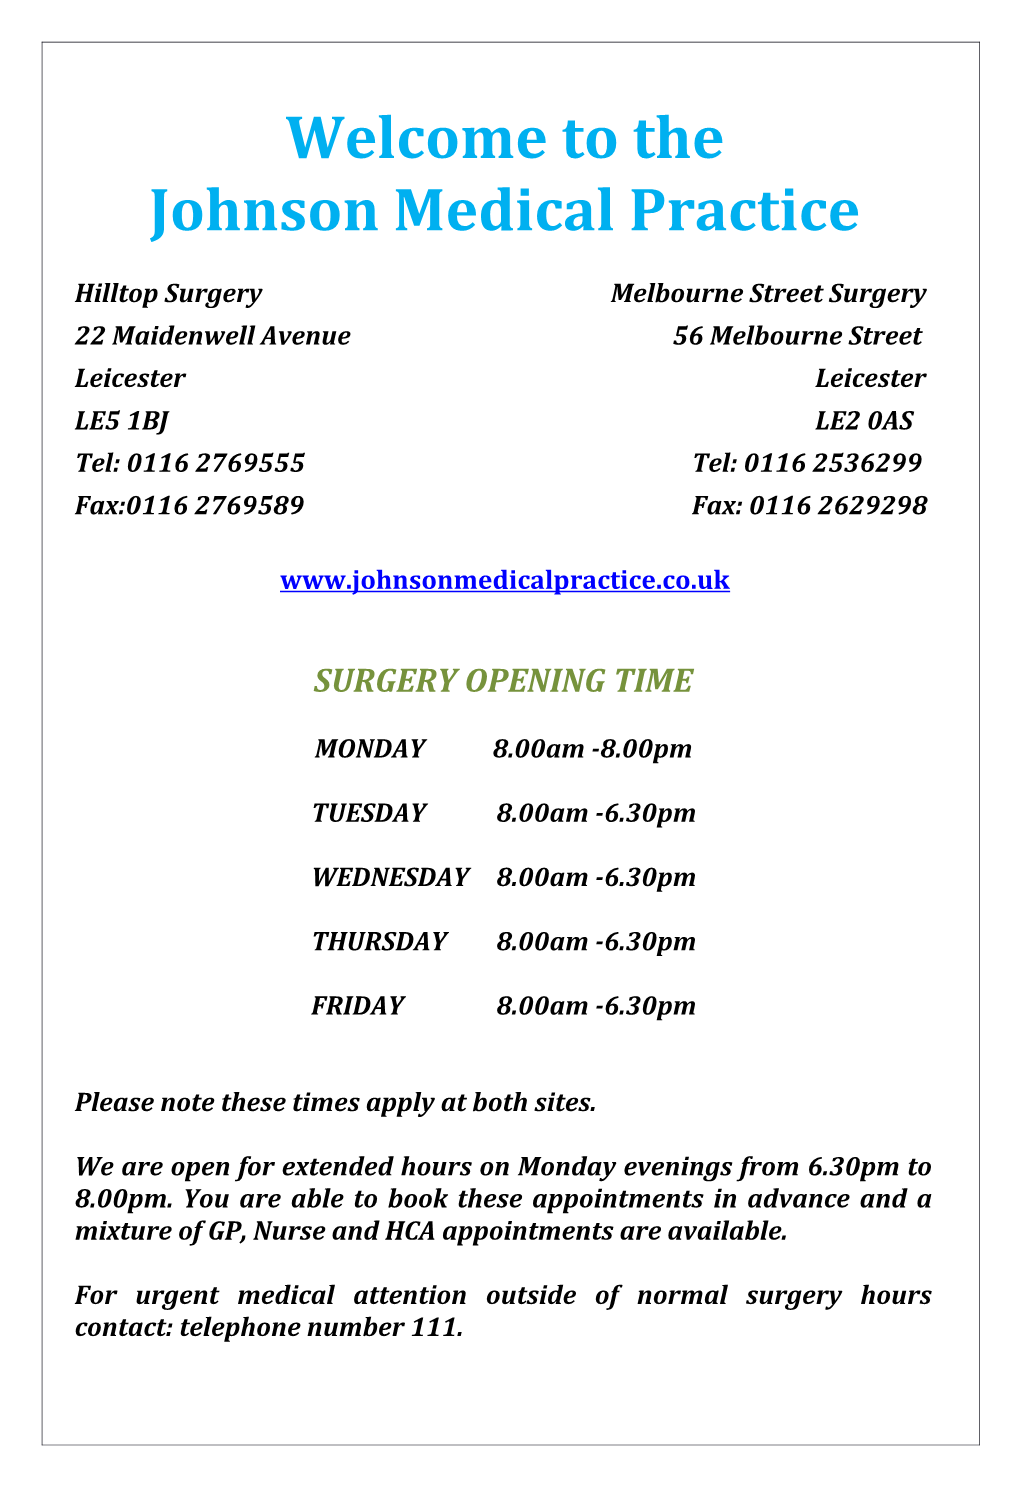 Hilltop Surgery Melbourne Street Surgery